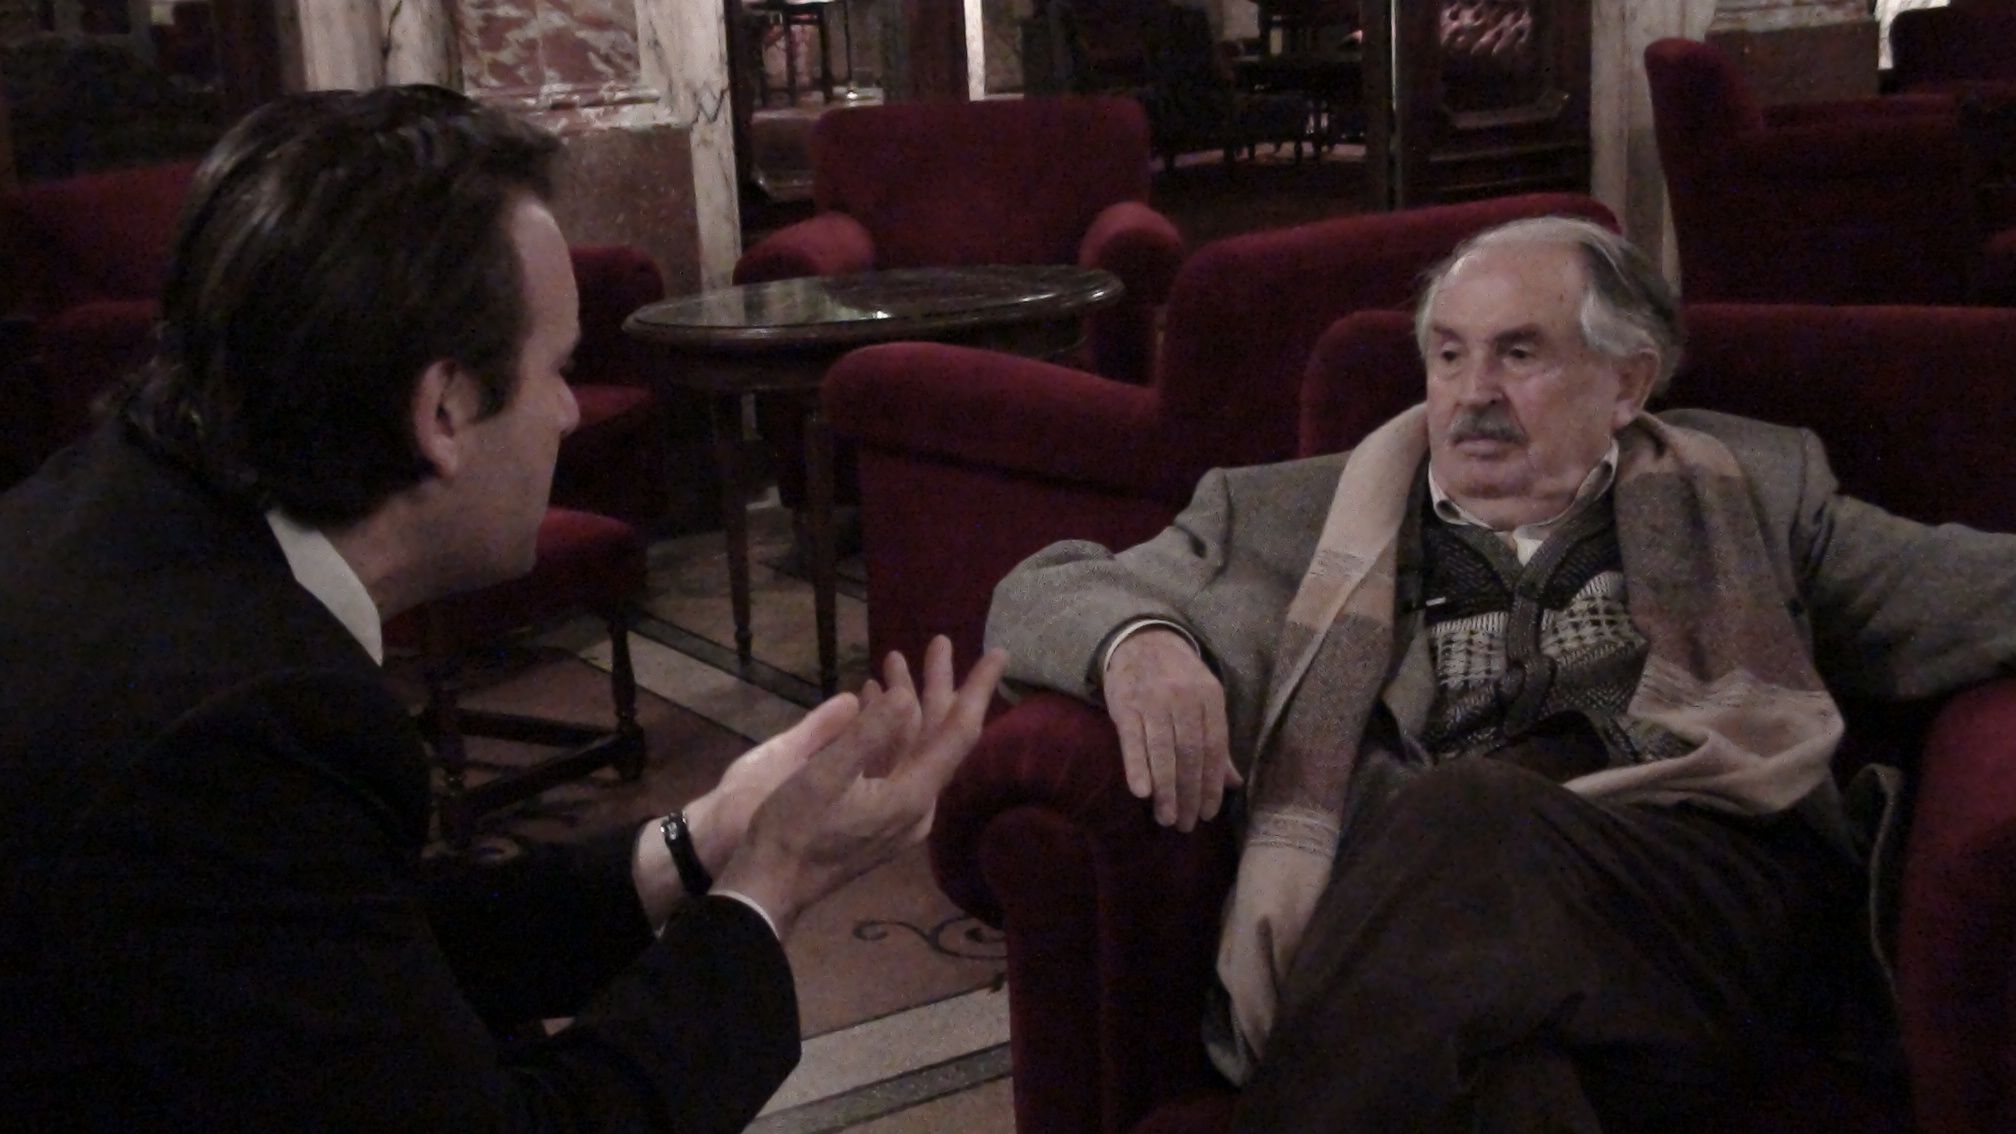 Marco Spagnoli interviews Tonino Guerra for 'Diversamente Giovane'.